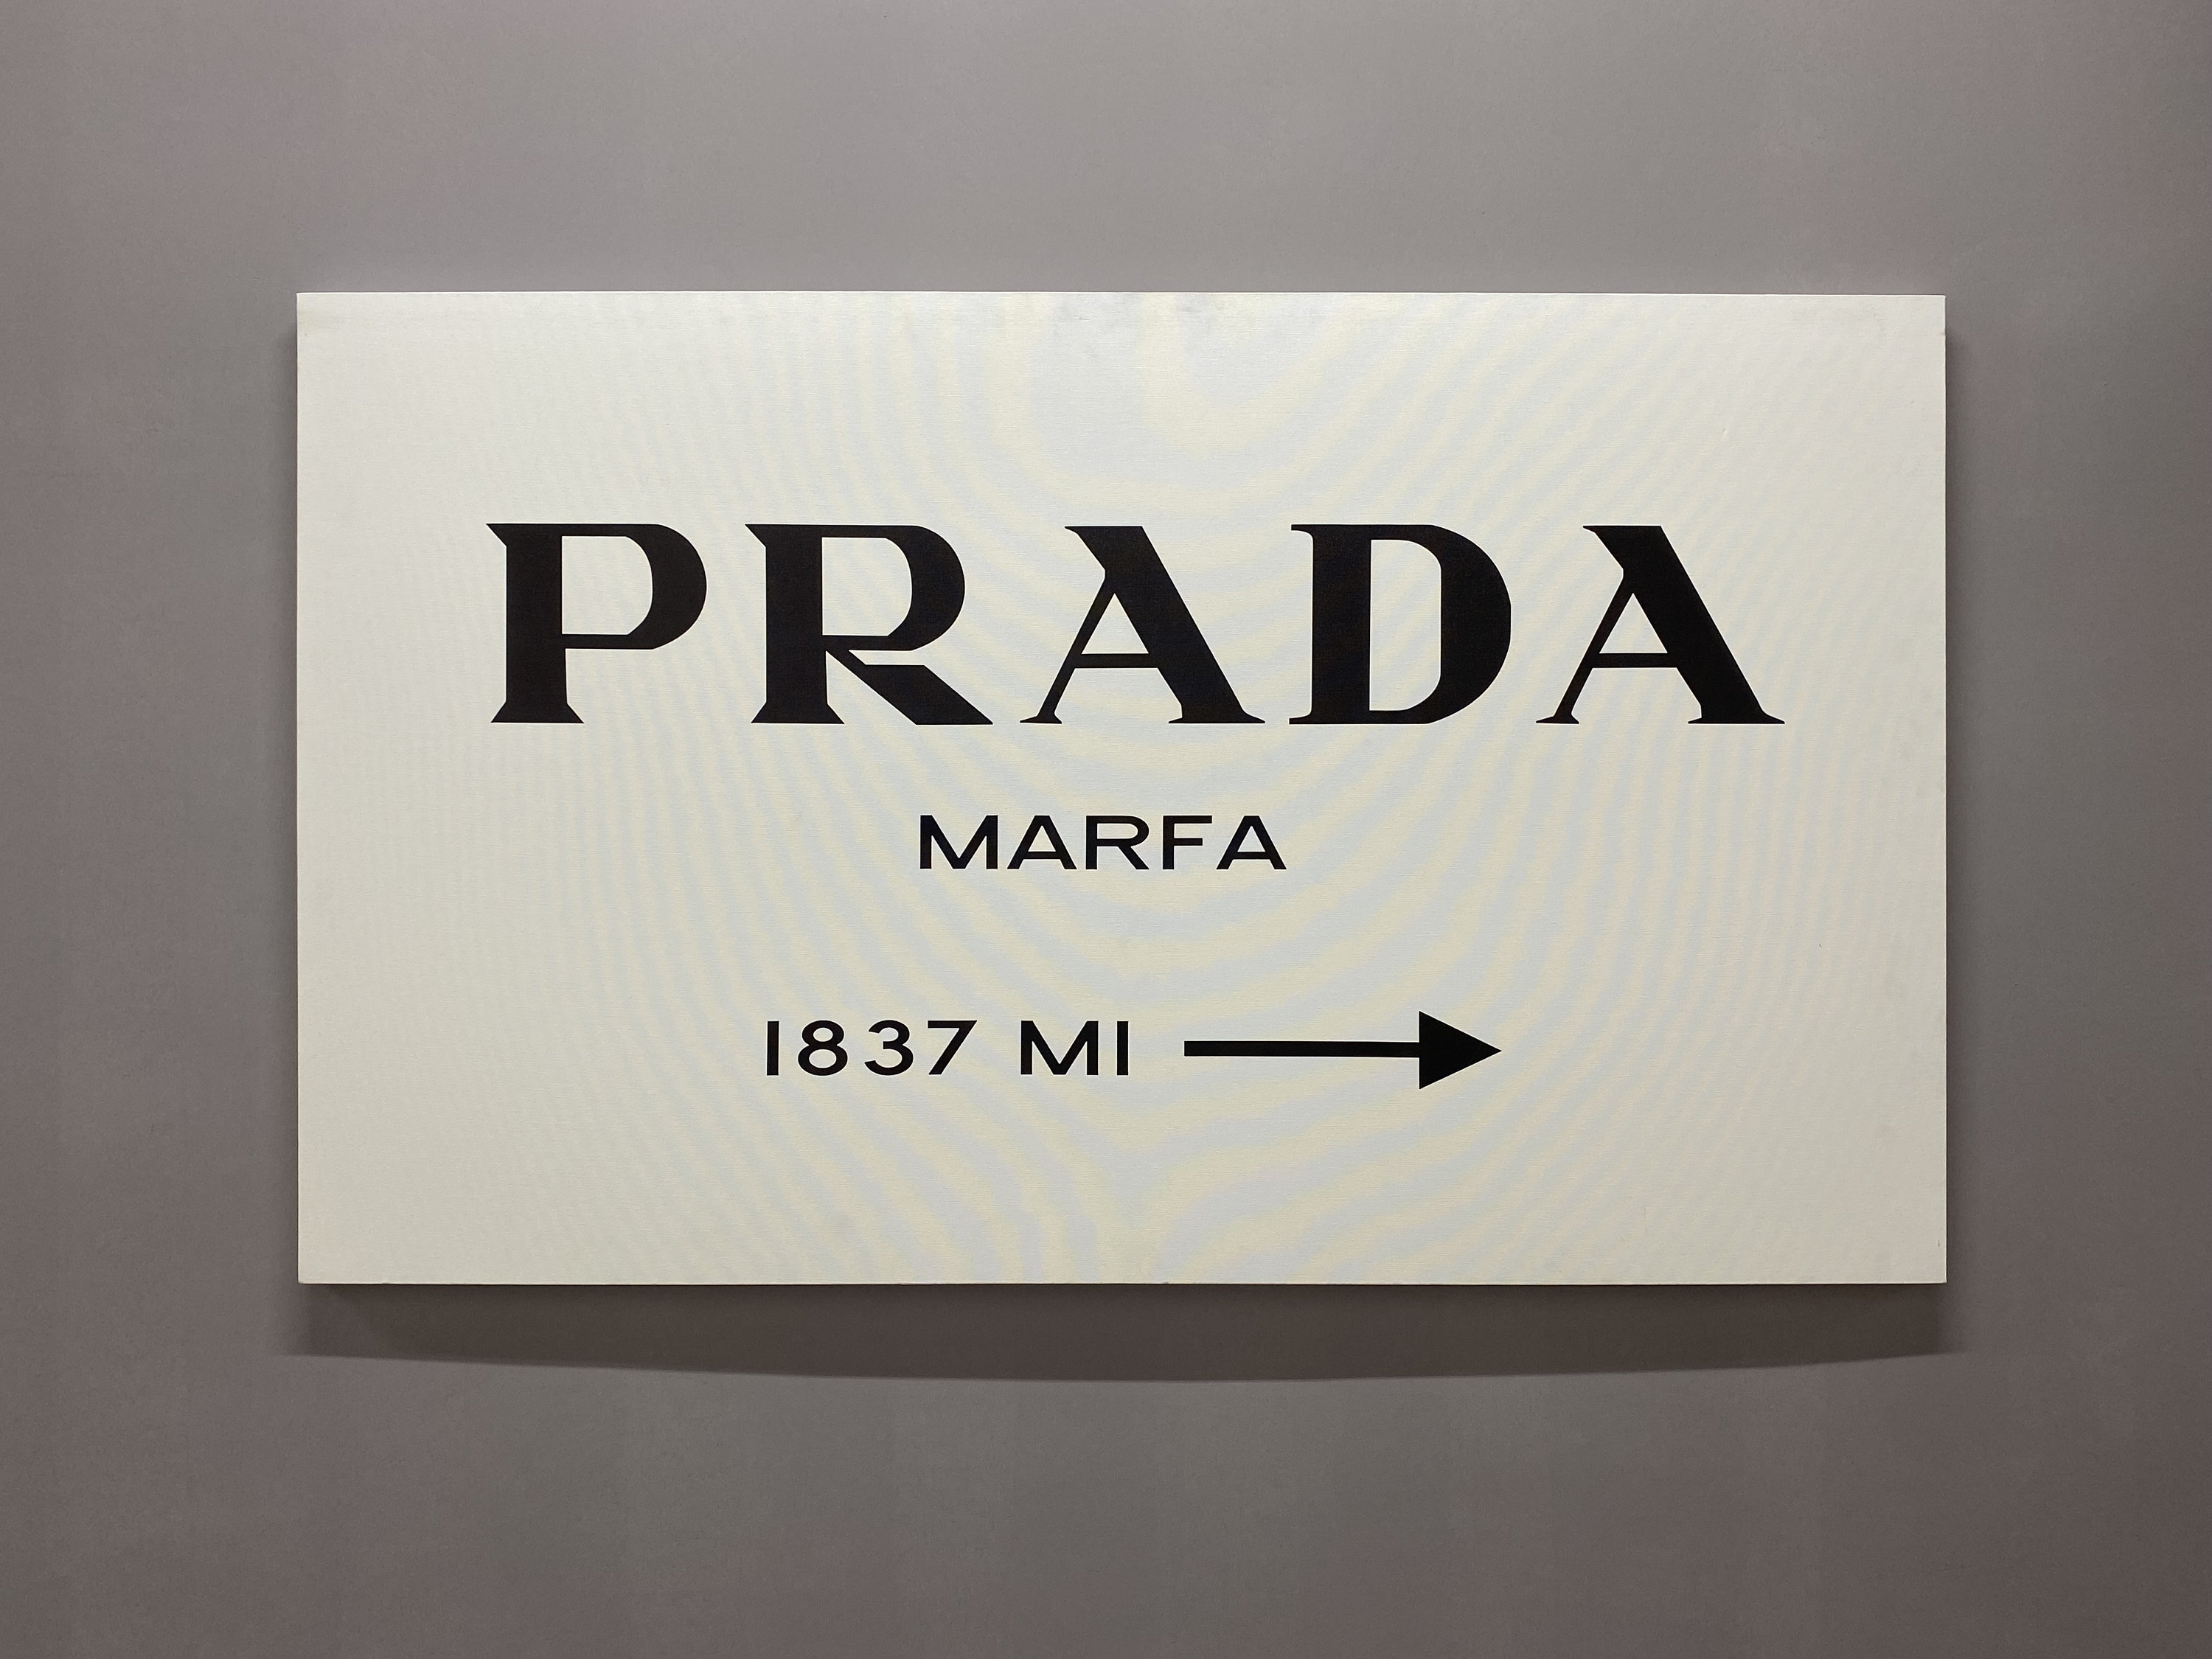 Prada Marfa ❤️ tableau seulement banane impression sur toile pro82